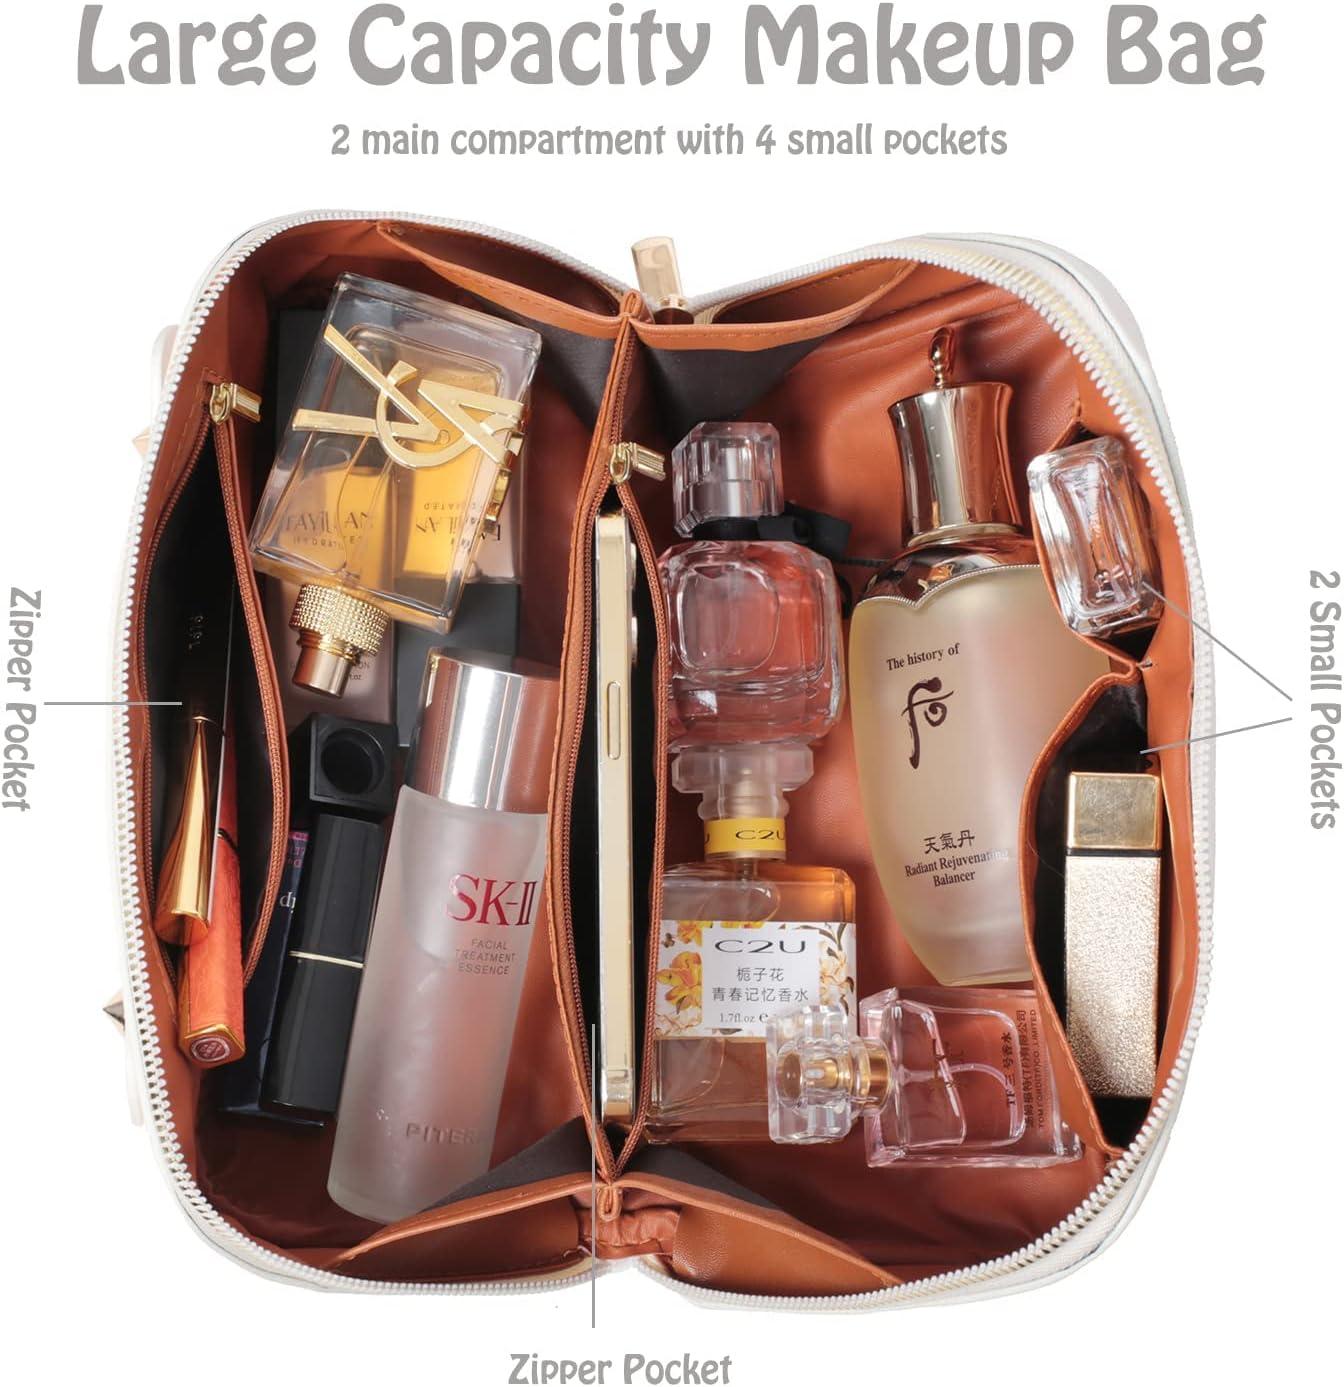 Katadem Travel Makeup Bag,Large Opening Portable Makeup Bag Opens Flat for  Easy Access, Toiletry Bag,PU Leather Makeup Bag,Cosmetic Organizer for